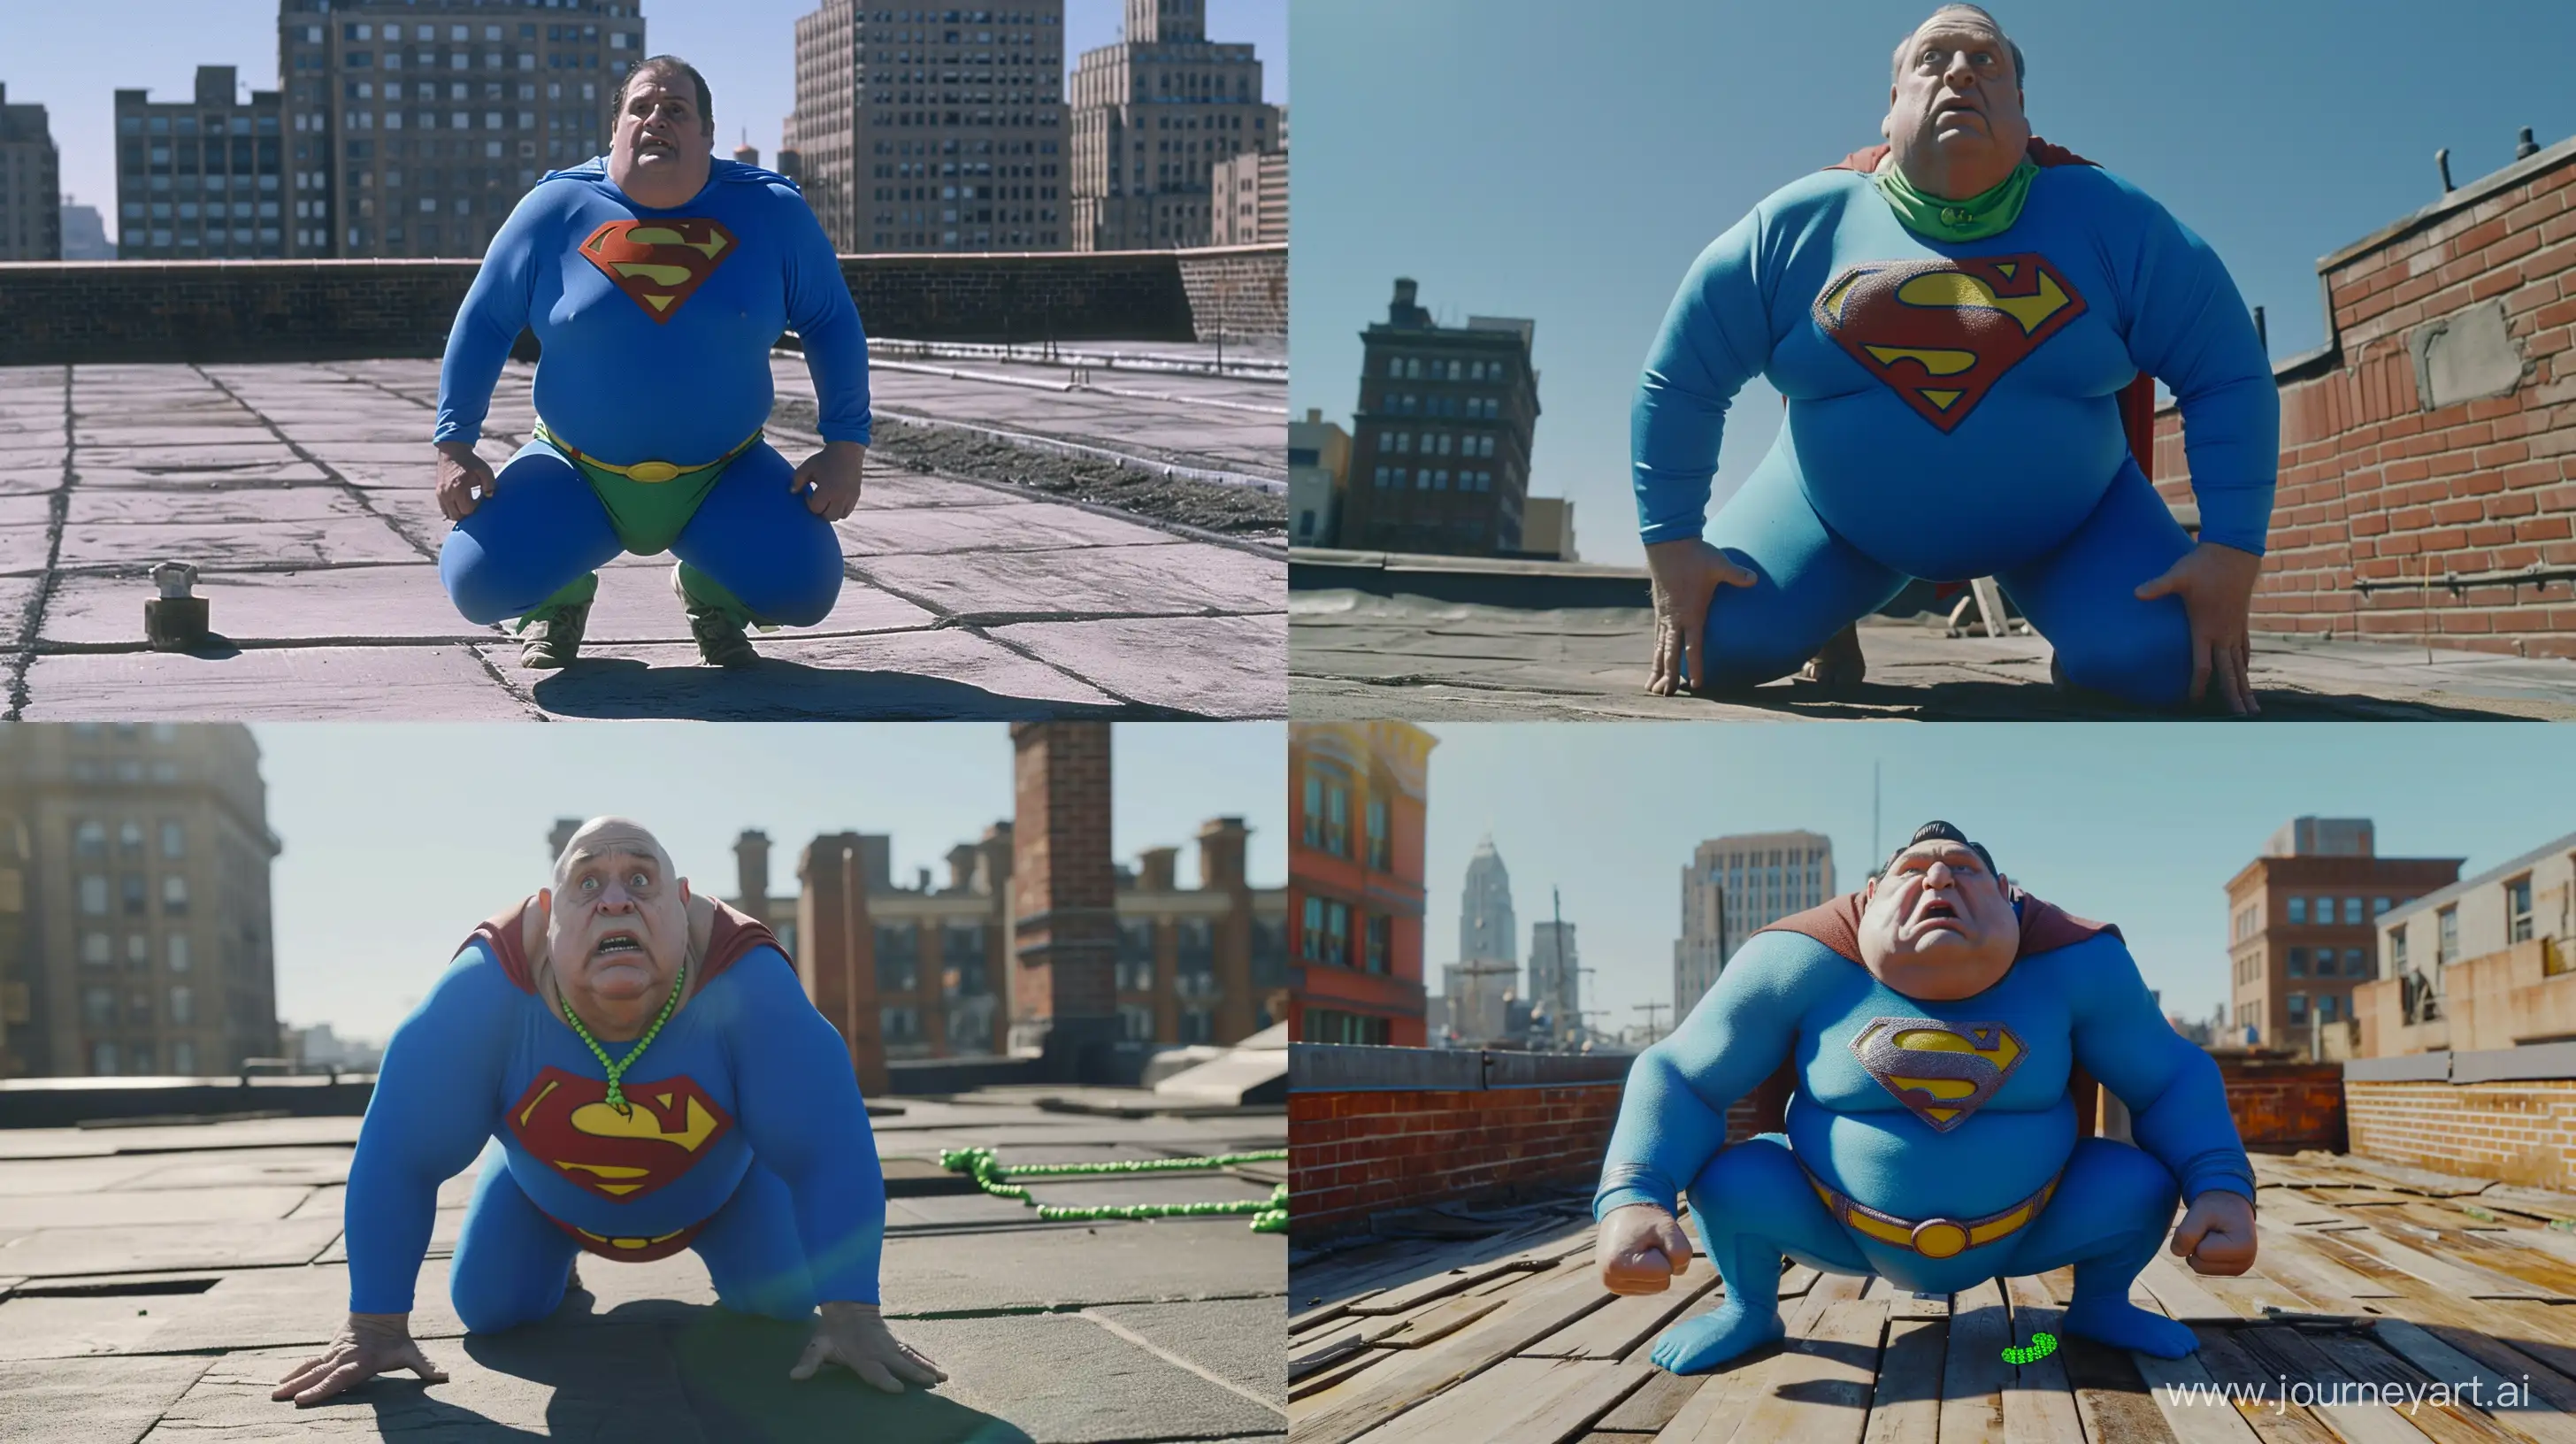 Elderly-Superman-Kneeling-on-Rooftop-in-Vibrant-Blue-Costume